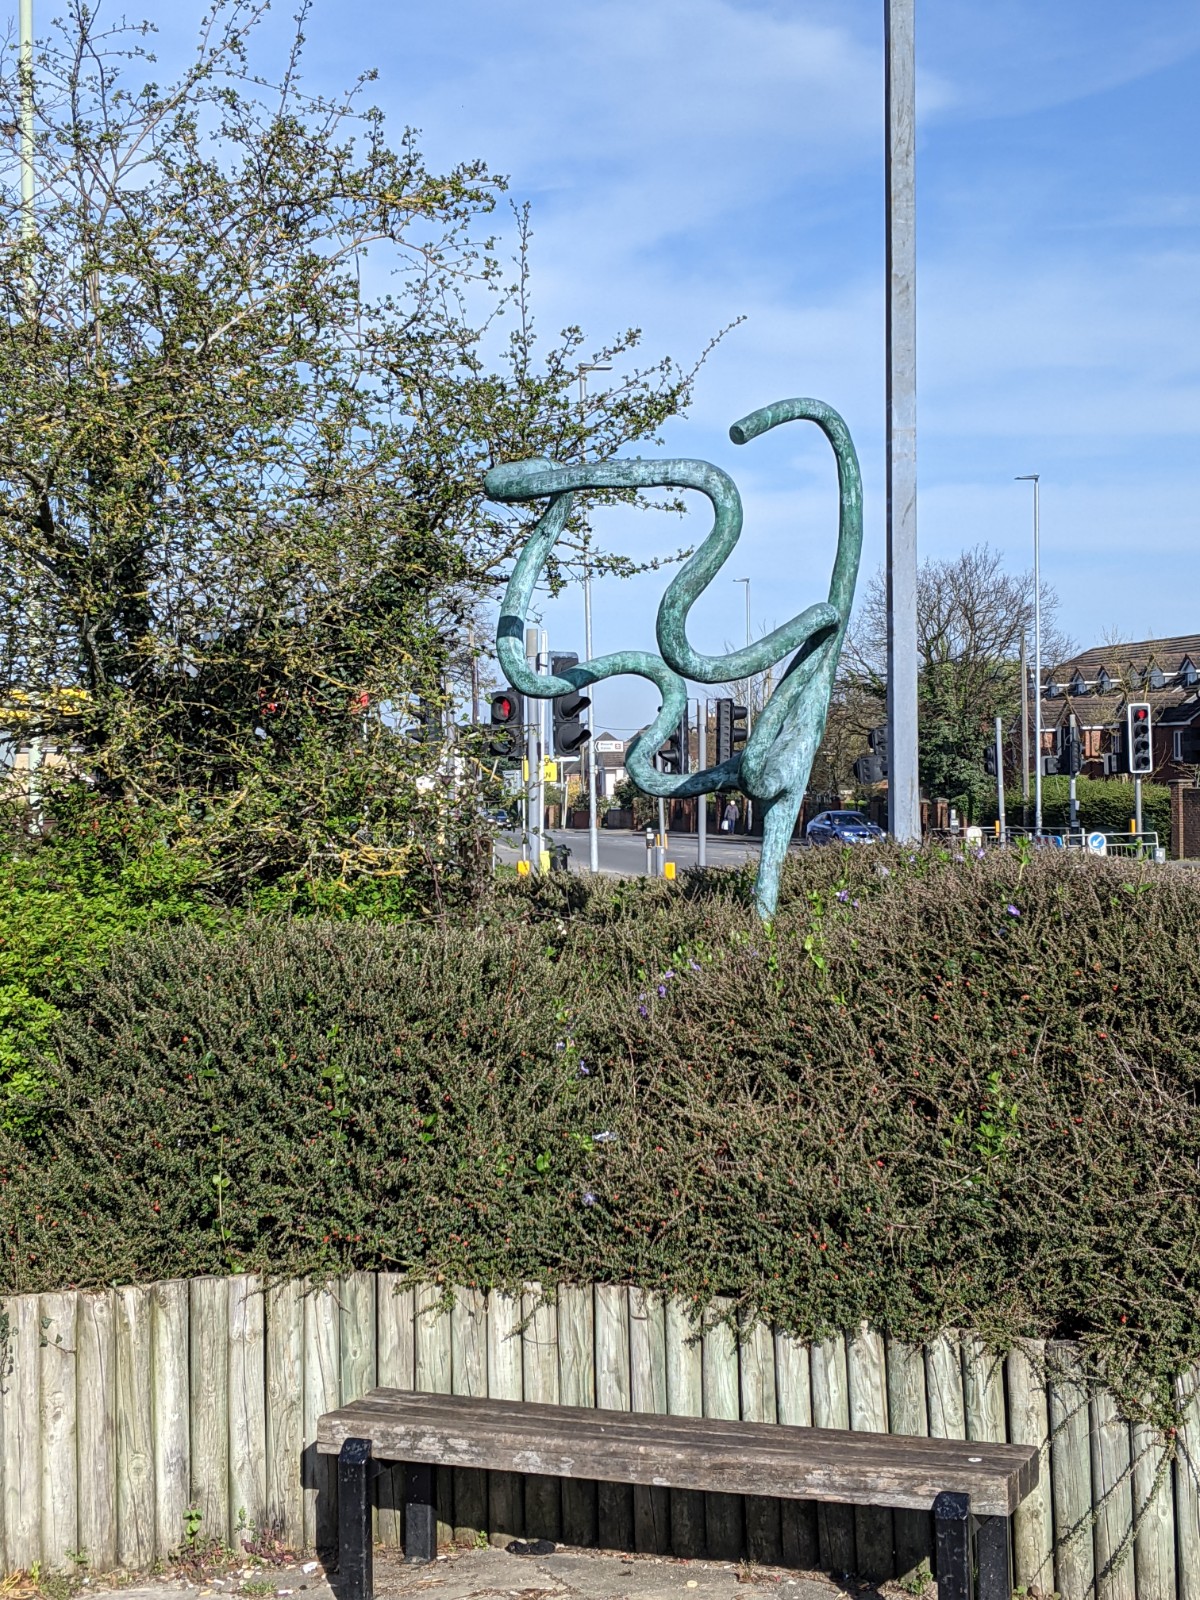 The Loddon Lily sculpture Sainsburys Winnersh